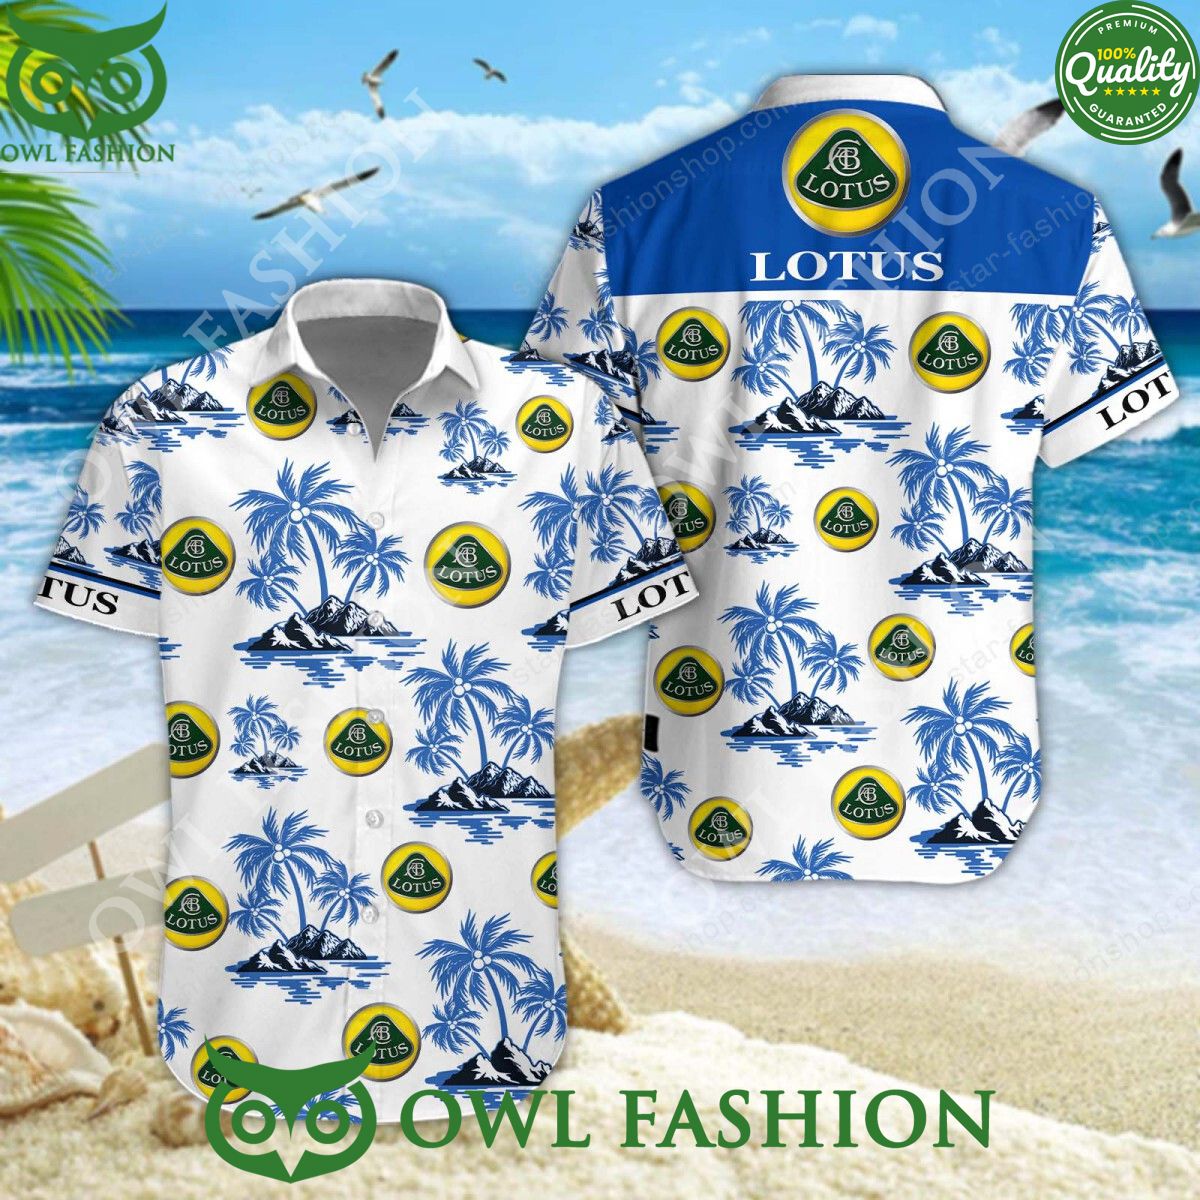 lotus luxury car manufacturer limited hawaiian shirt shorts 1 tI5rq.jpg